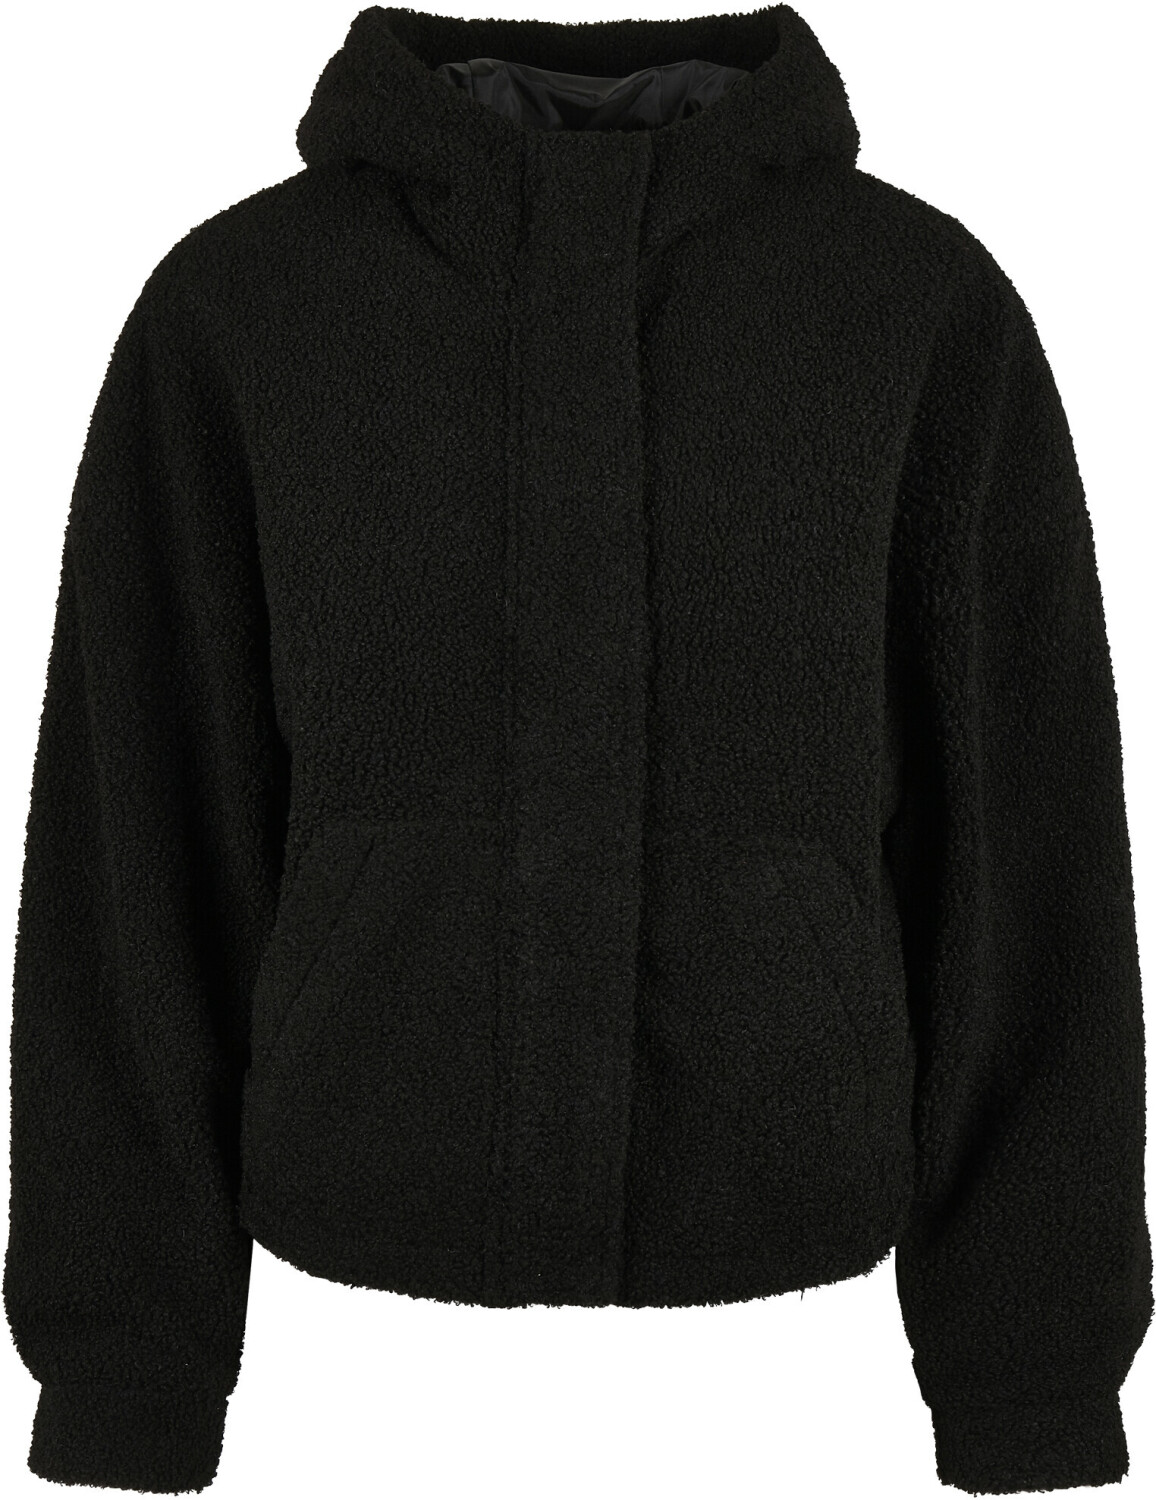 32,99 € Classics ab Sherpa Preisvergleich Short black (TB4545-00007-0037) bei Urban Ladies Jacket |